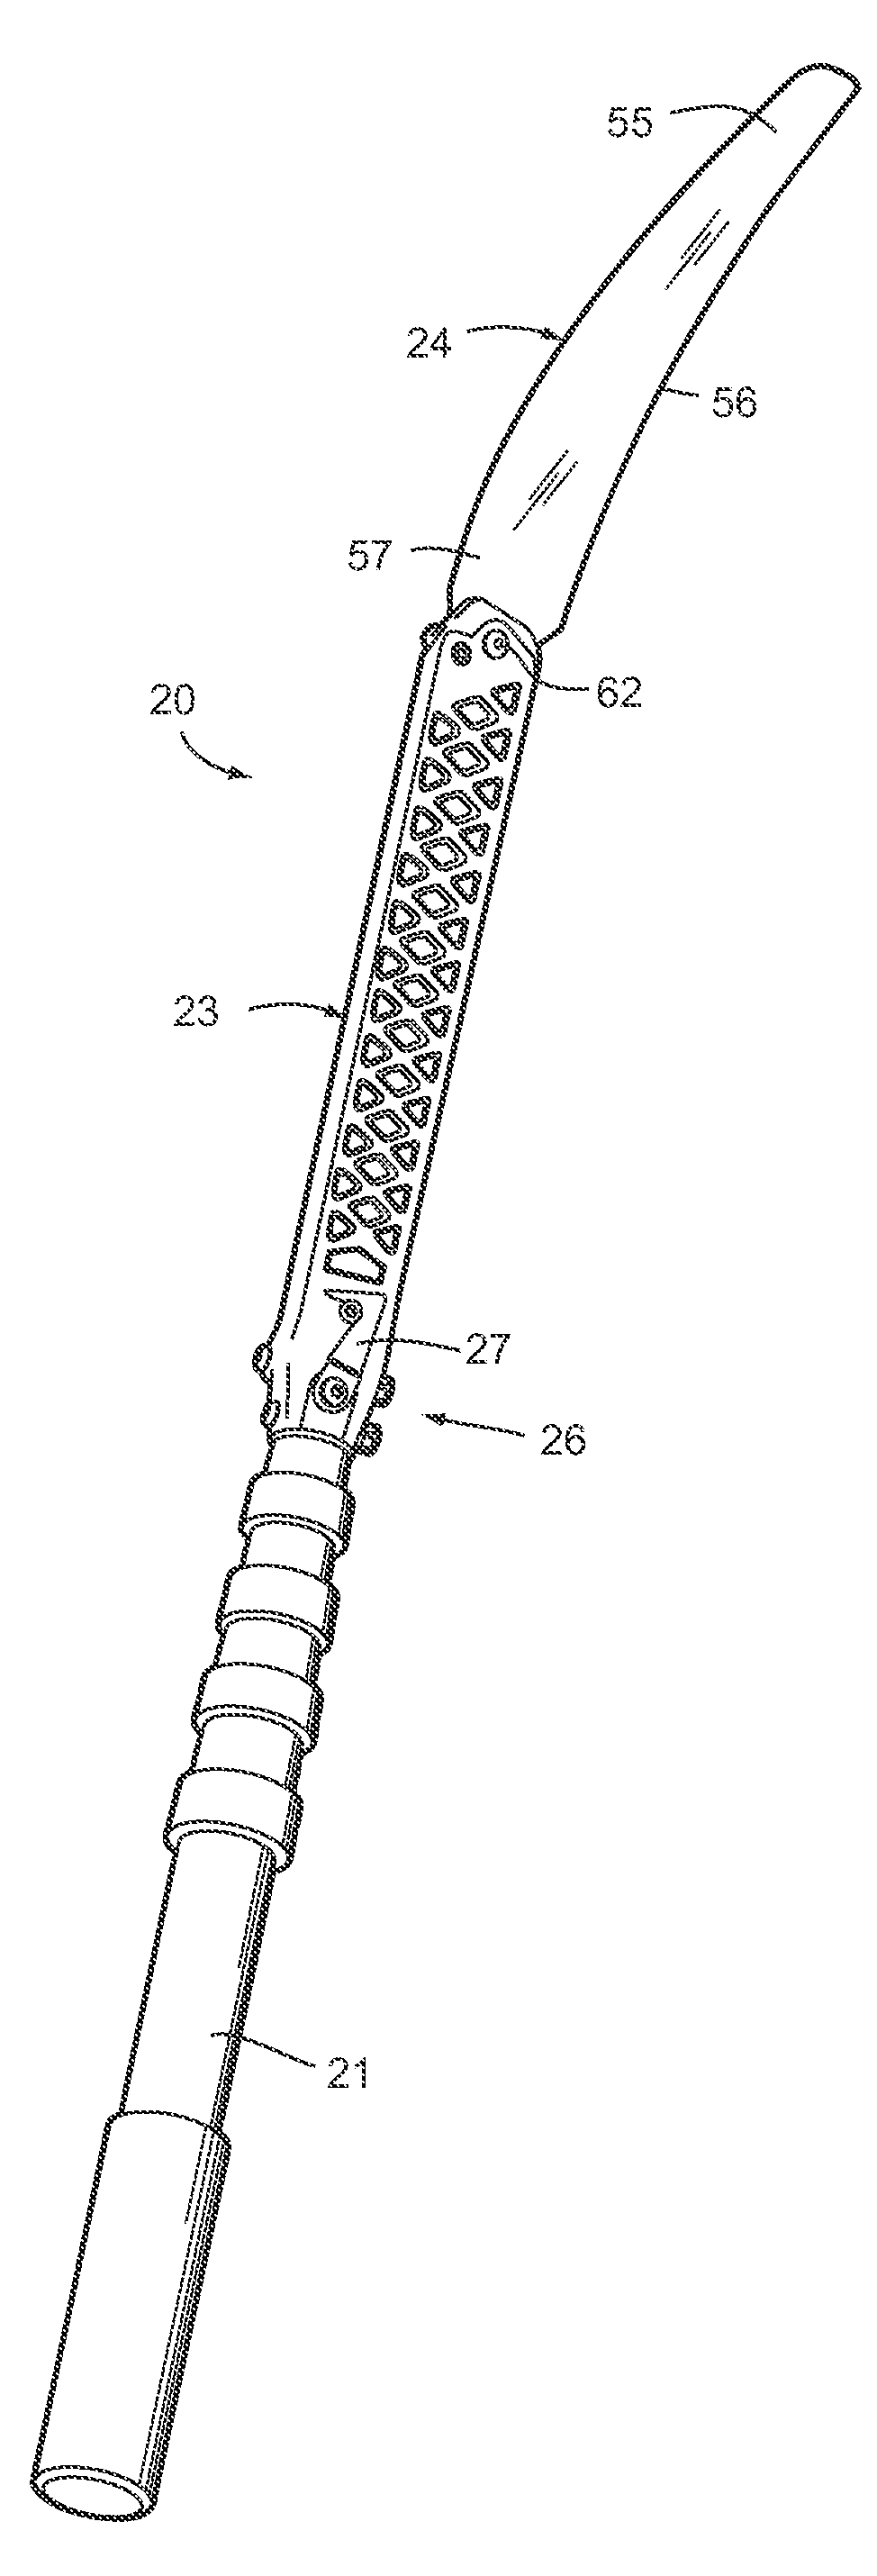 Foldable-storable pole saw